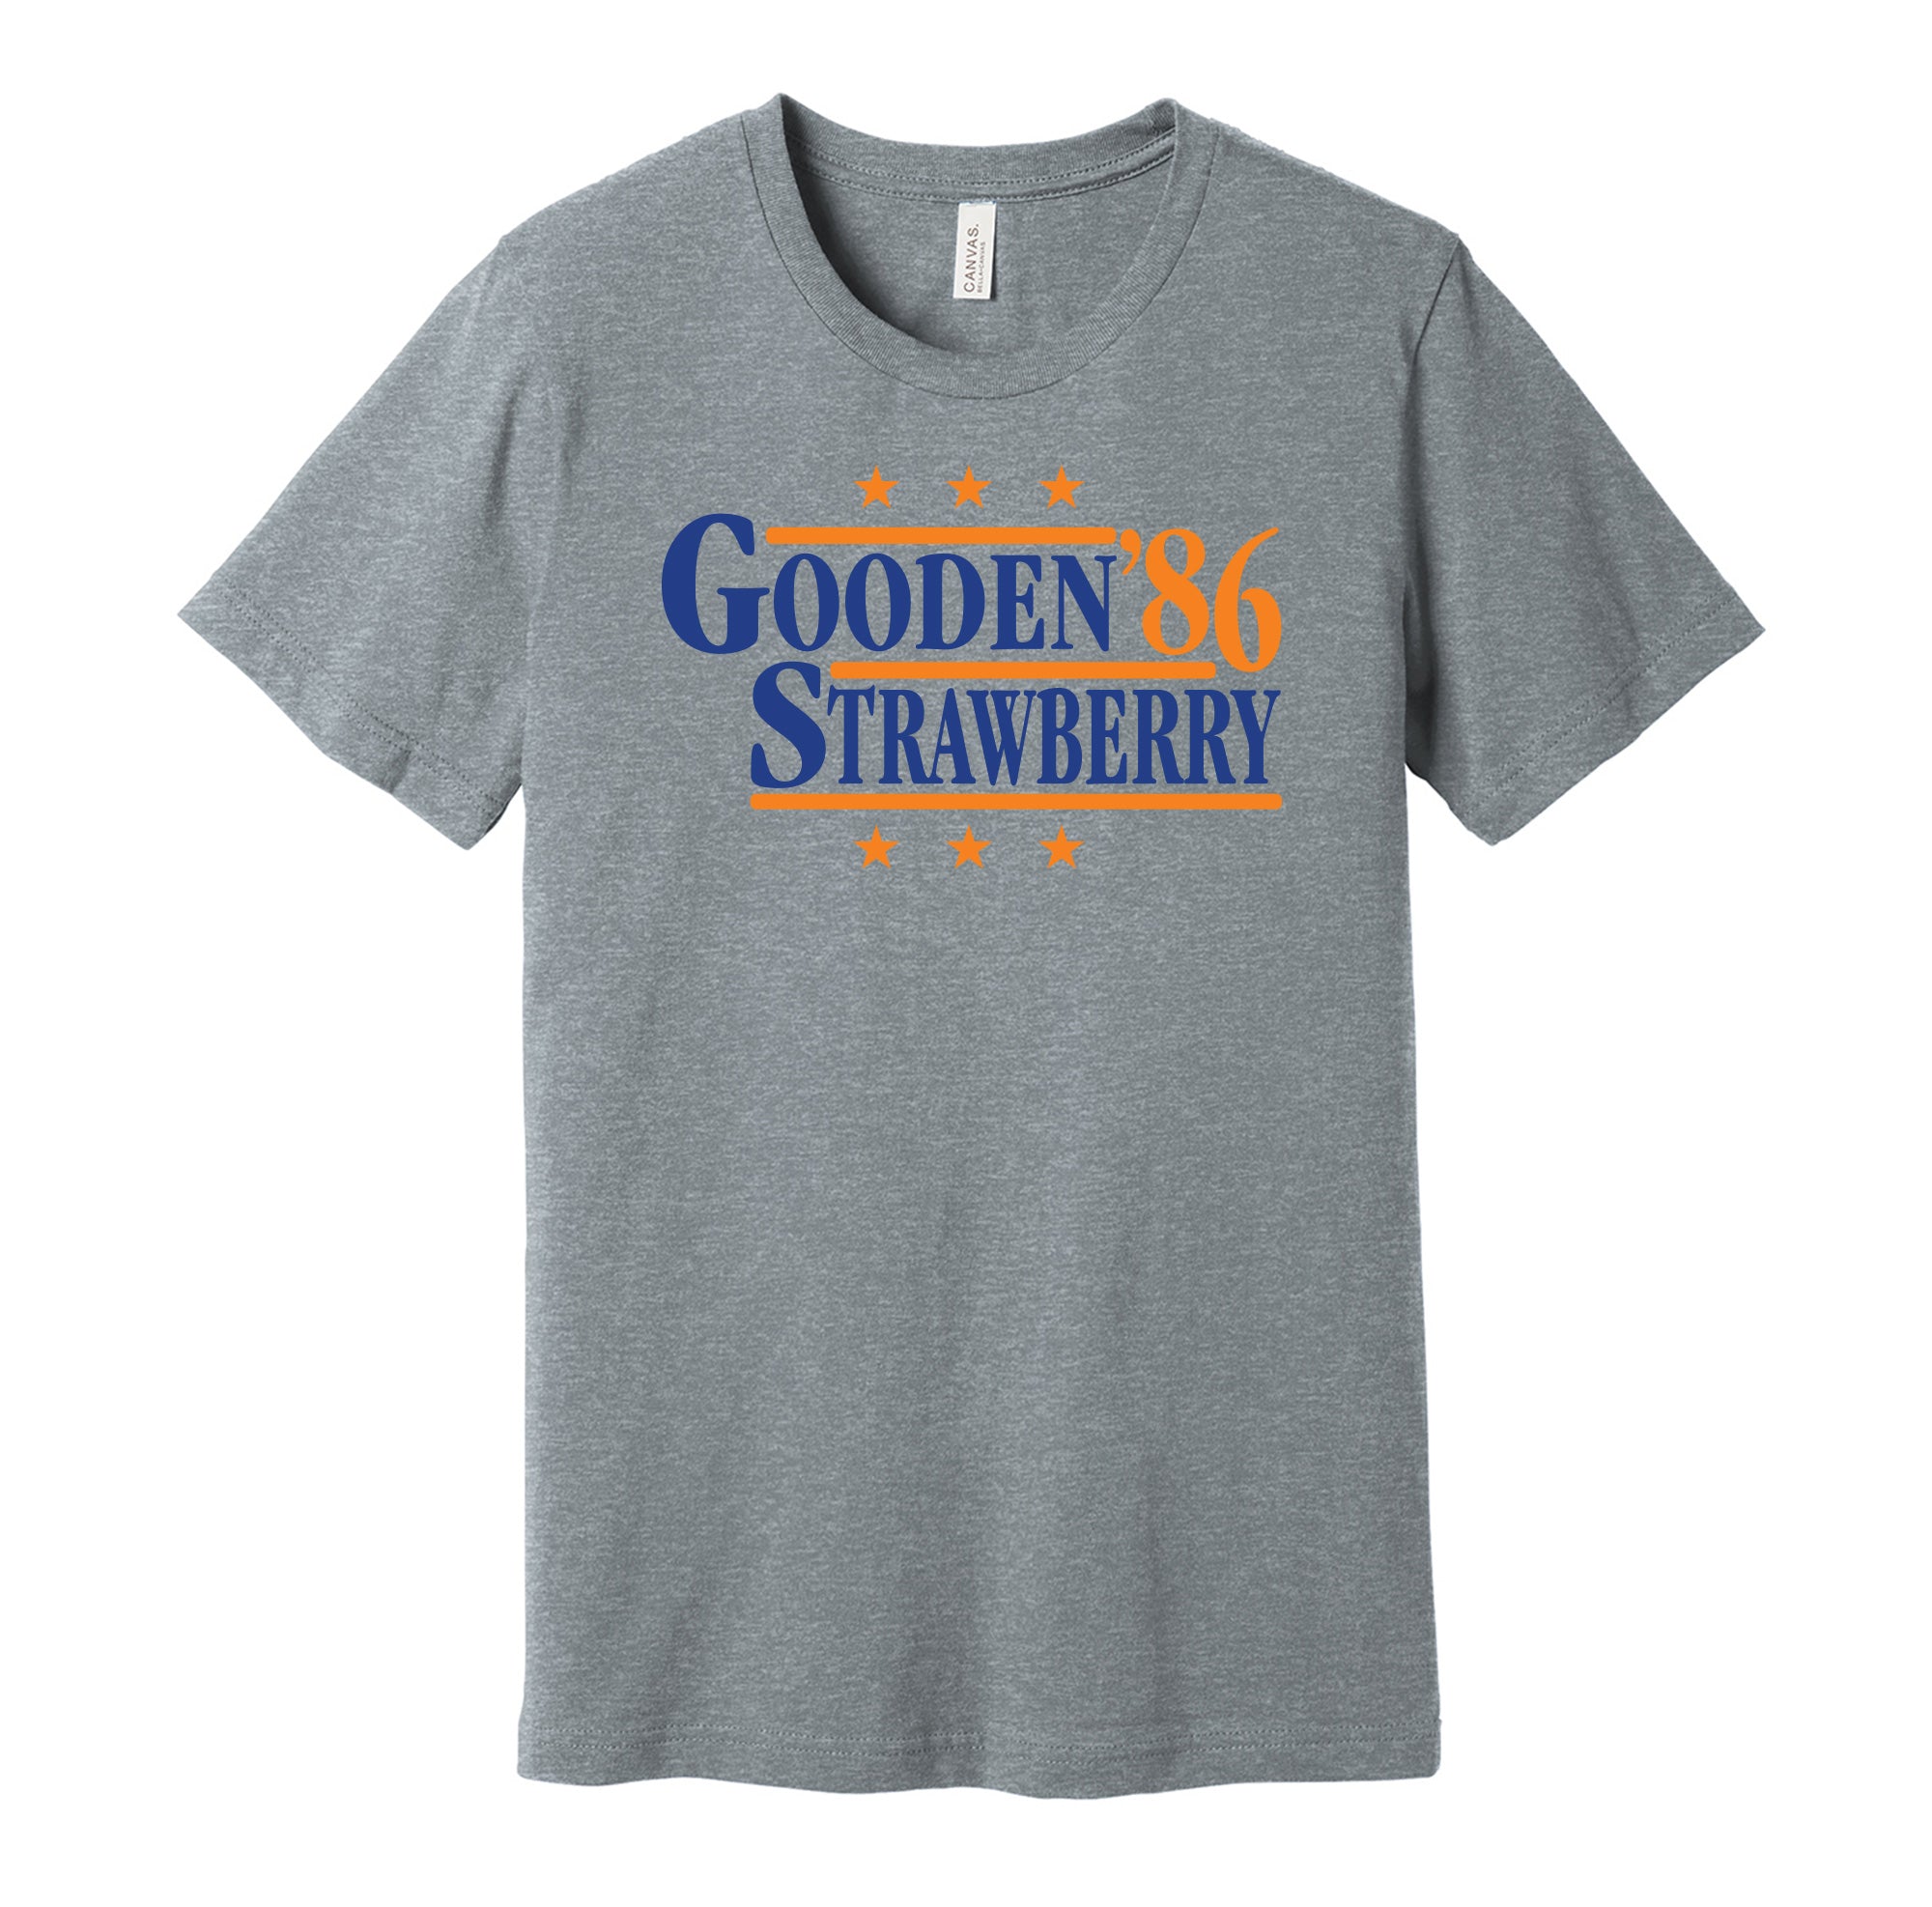 New York Mets Jets Islanders T Shirt - Growkoc